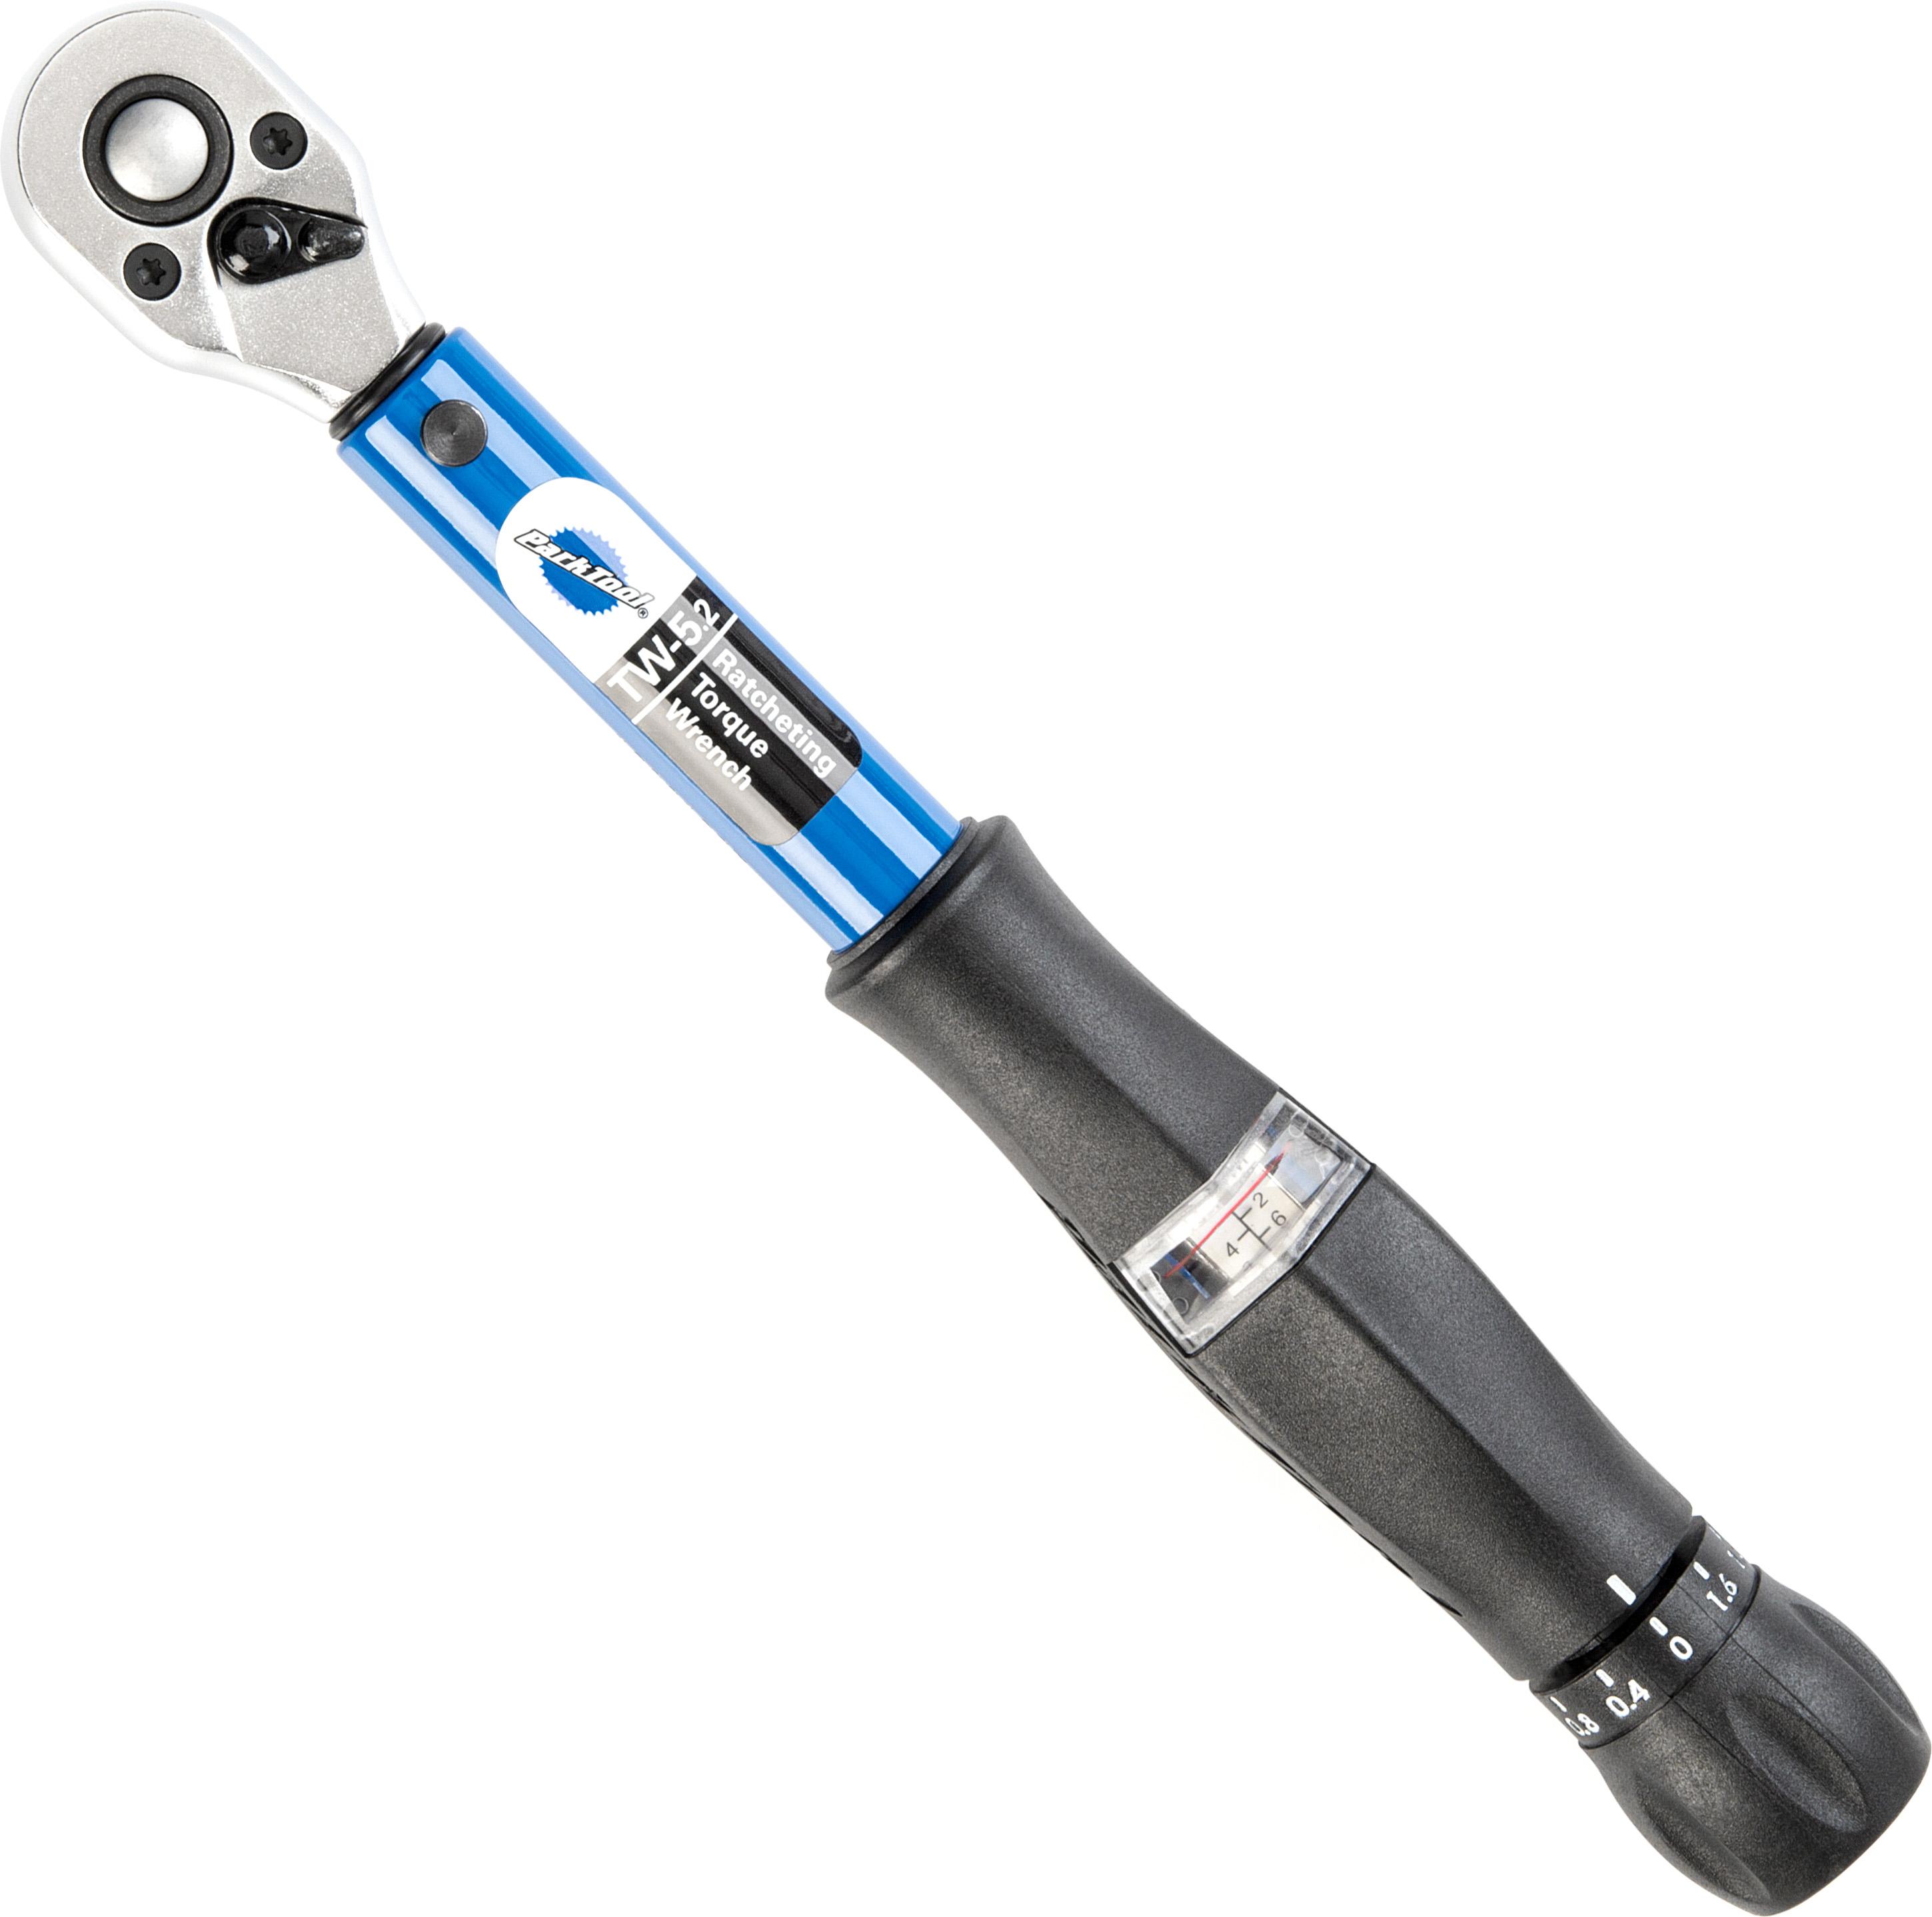 Park Tool Tw-5.2 Torque Wrench - Blue/black